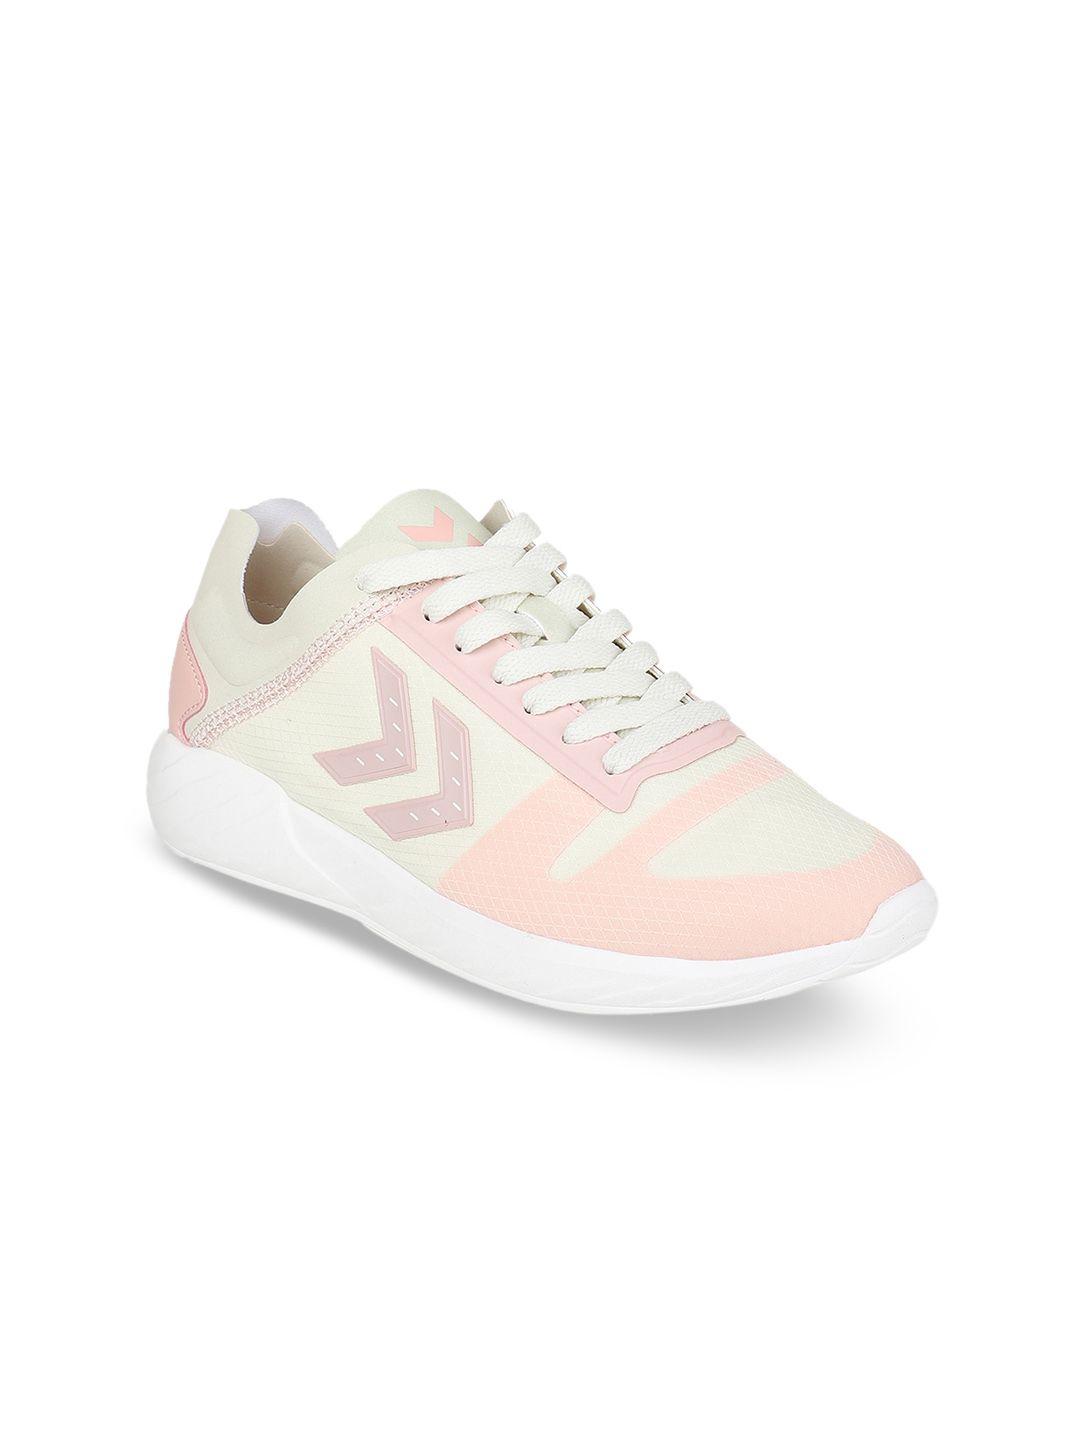 hummel women off white & pink colourblocked pu sneakers